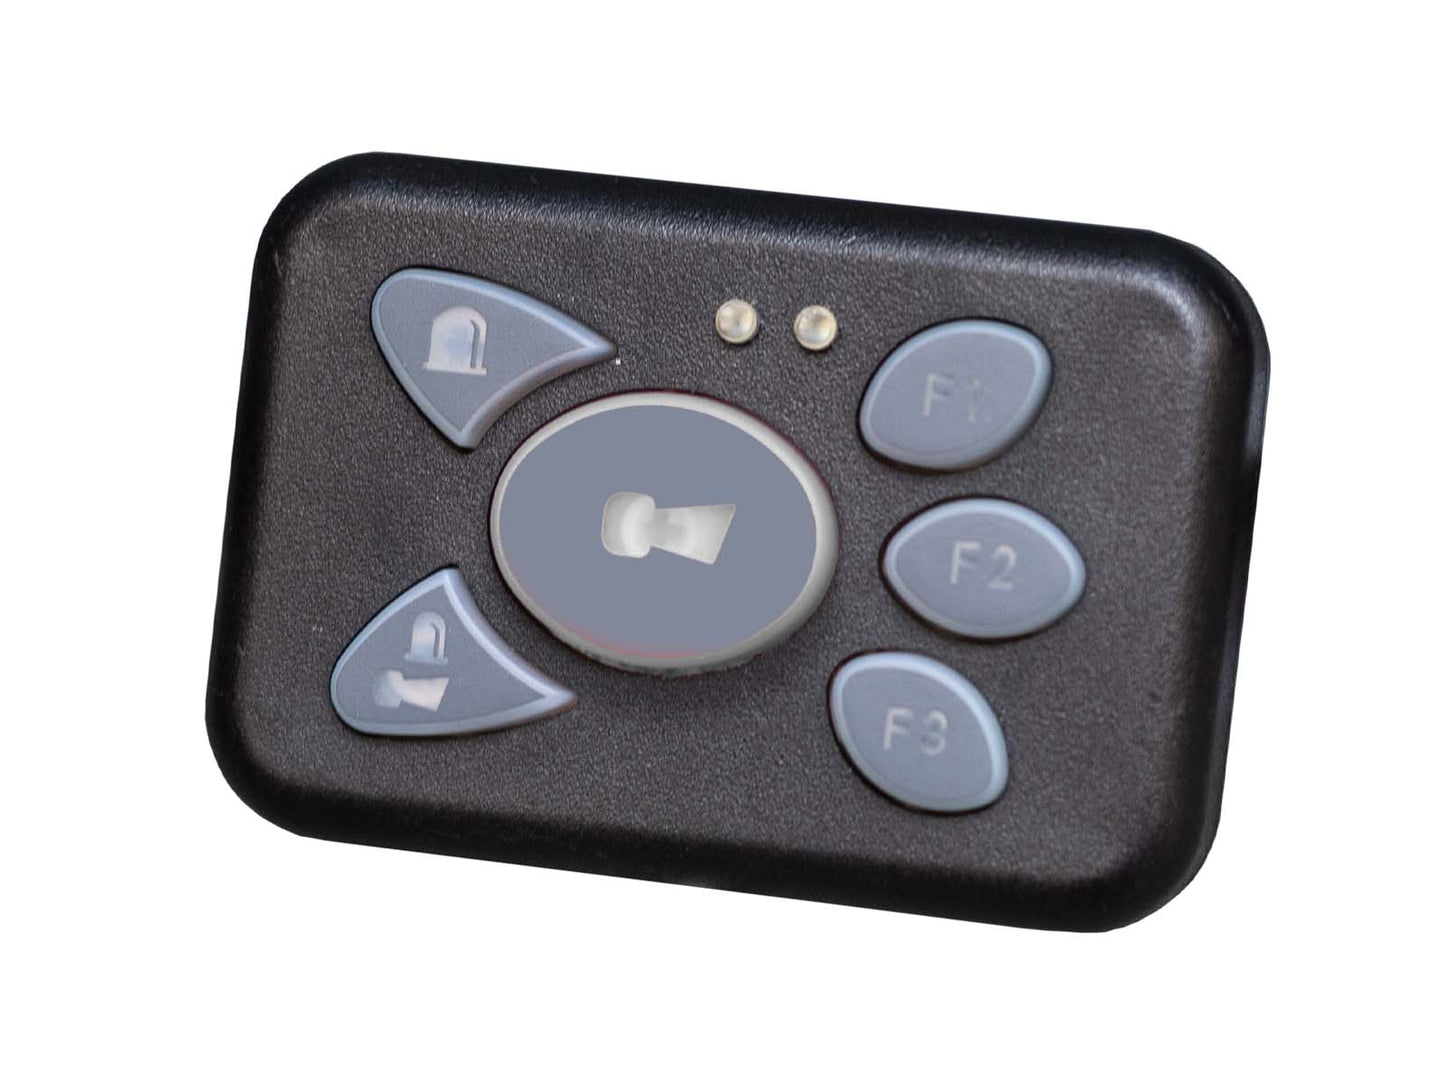 Standby BT-210 keypad